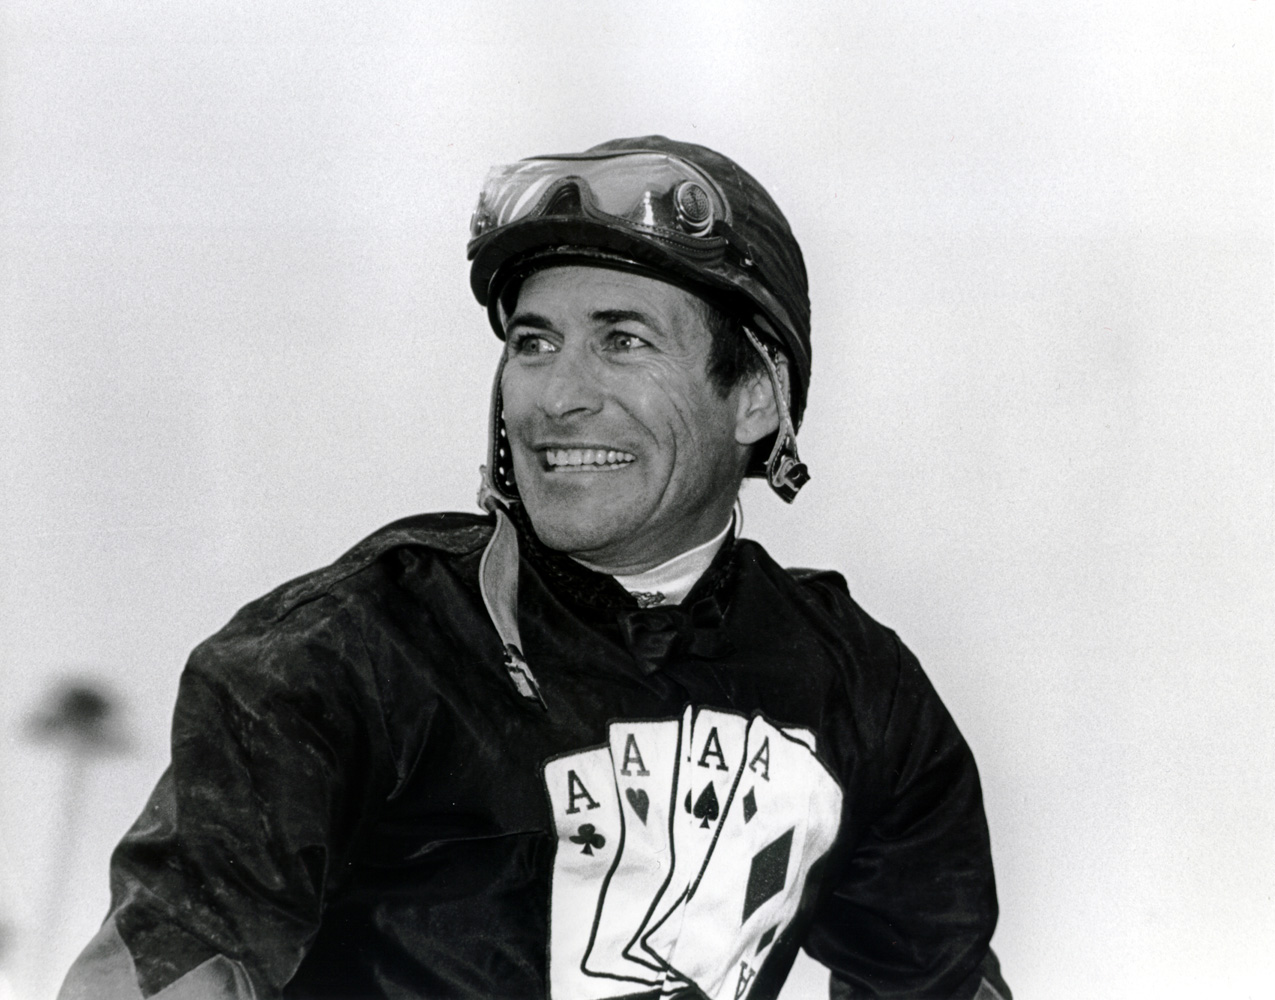 Gary Stevens after winning the 2004 Malibu Stakes with Rock Hard Ten at Santa Anita (Bill Mochon/Museum Collection)